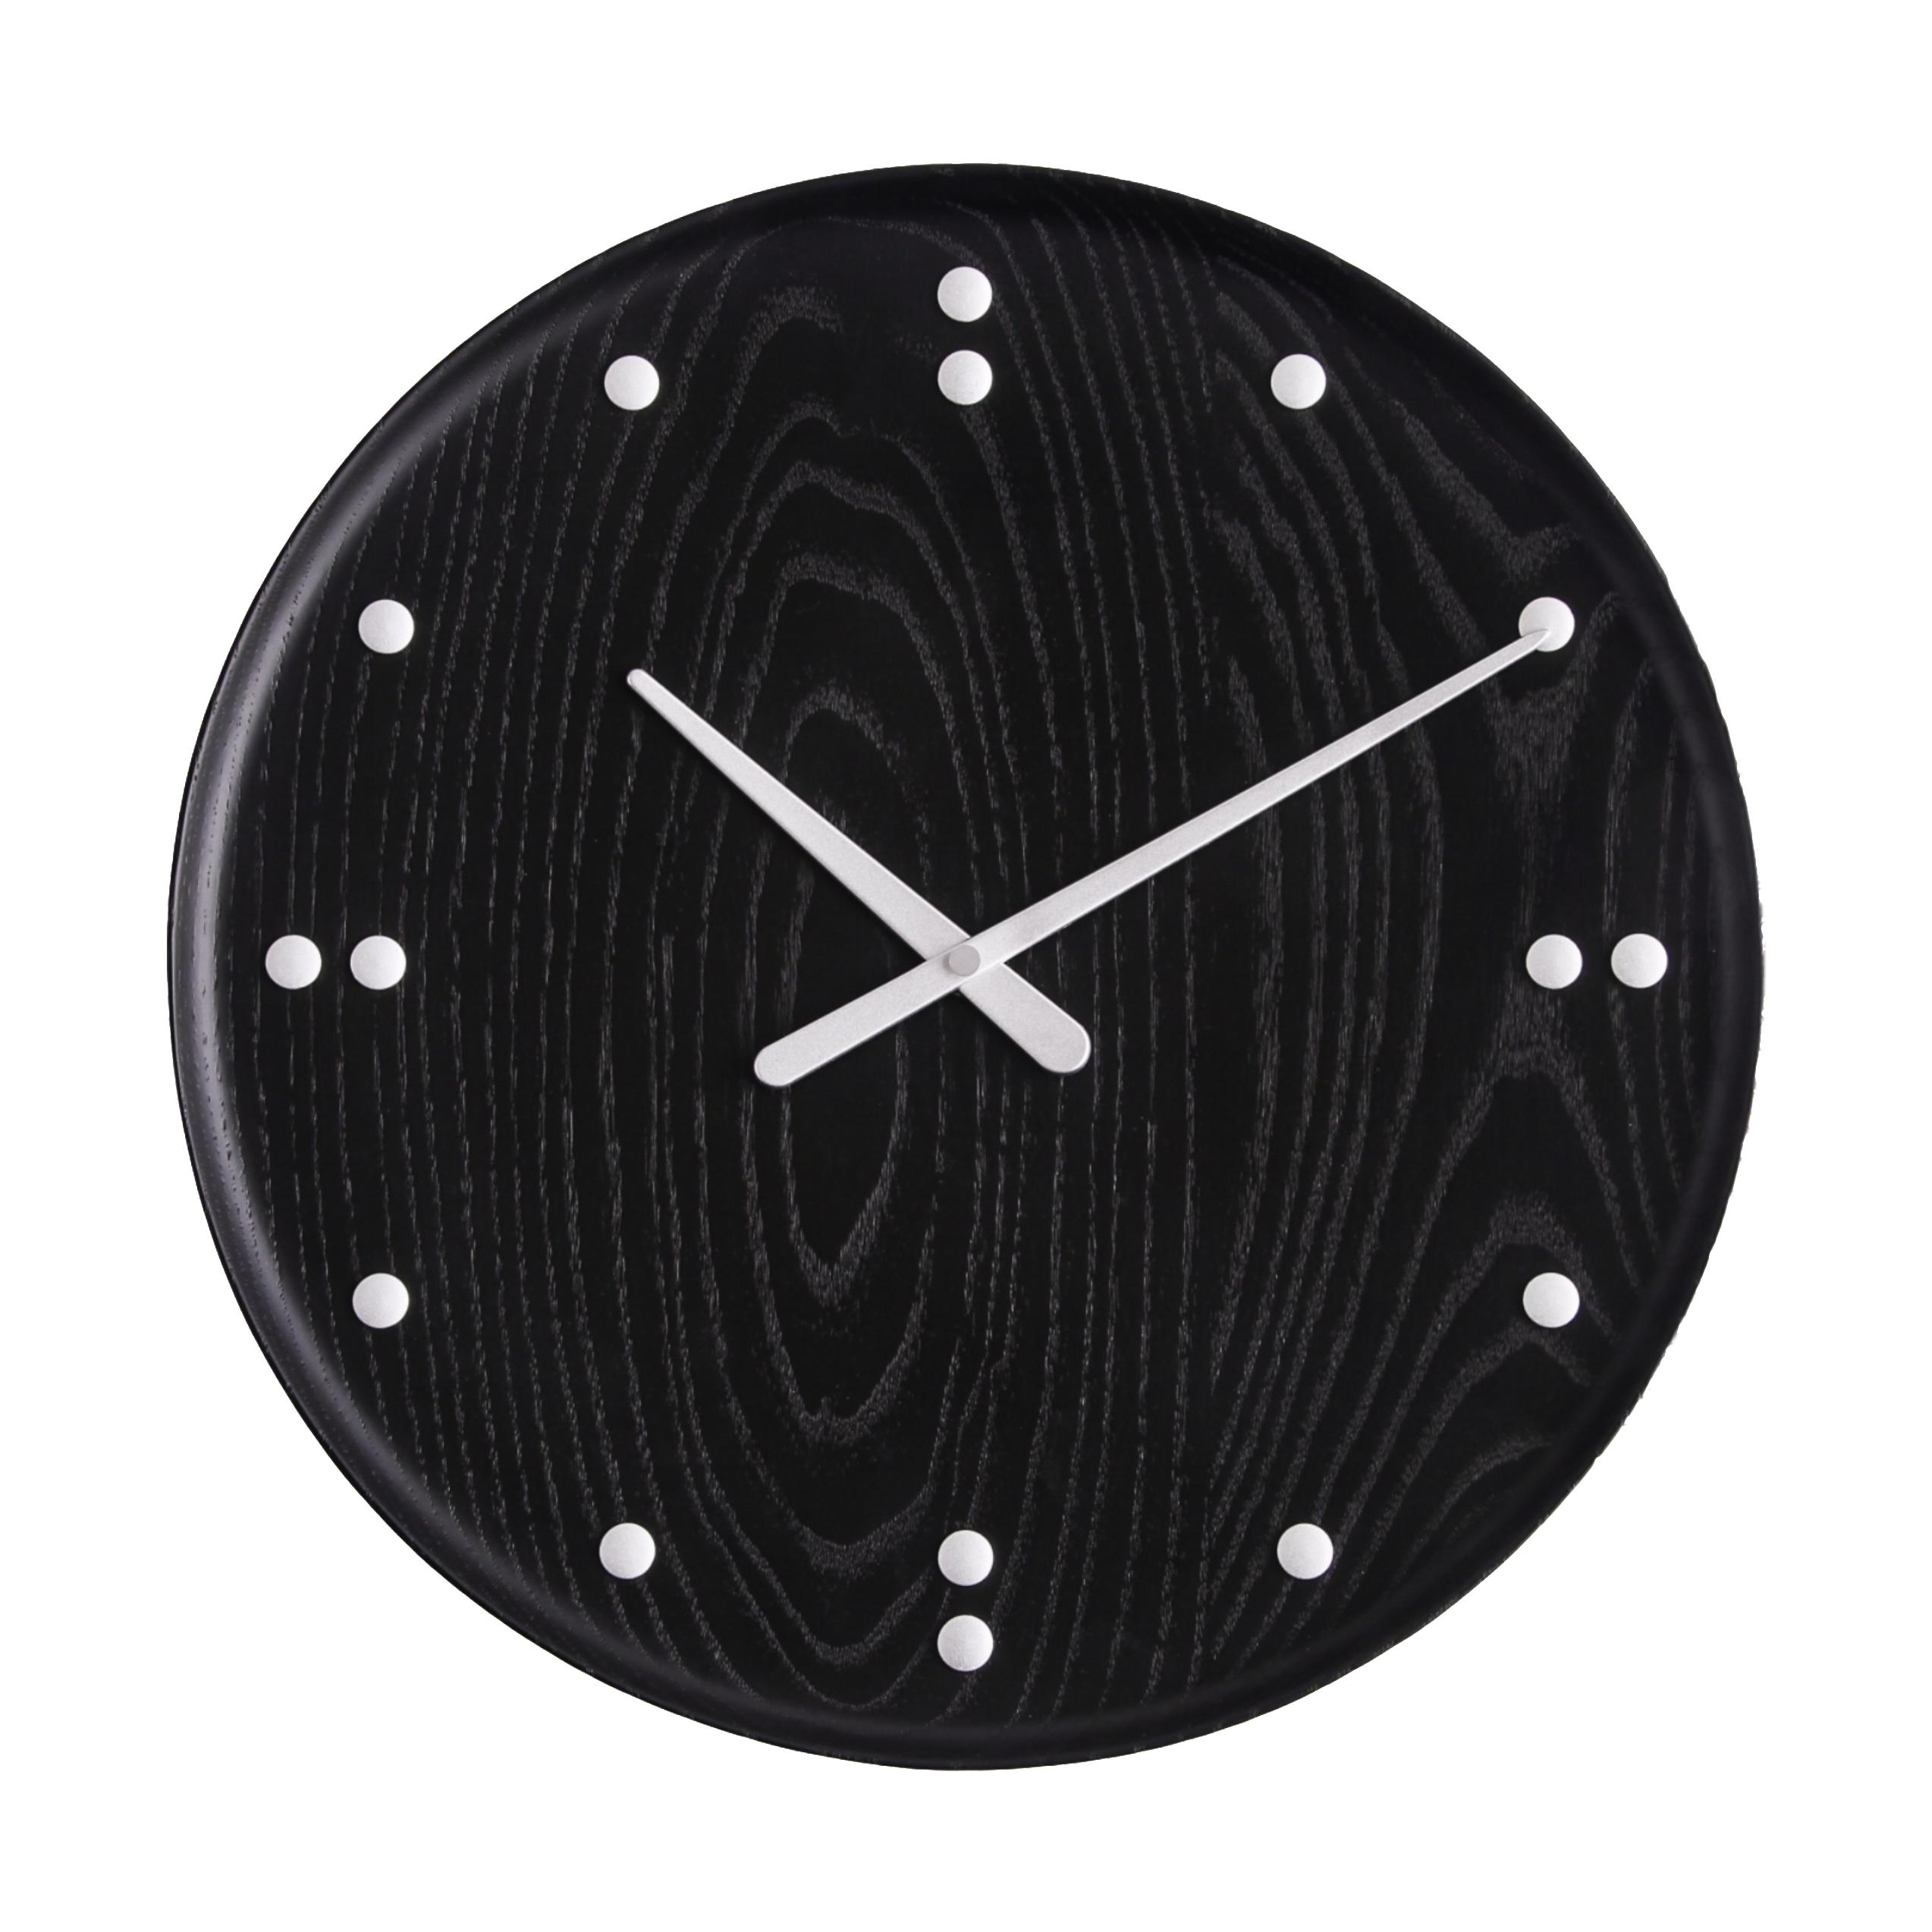 ArkitektMade Finn Juhl Wall Clock Black Ash, Ø35 cm